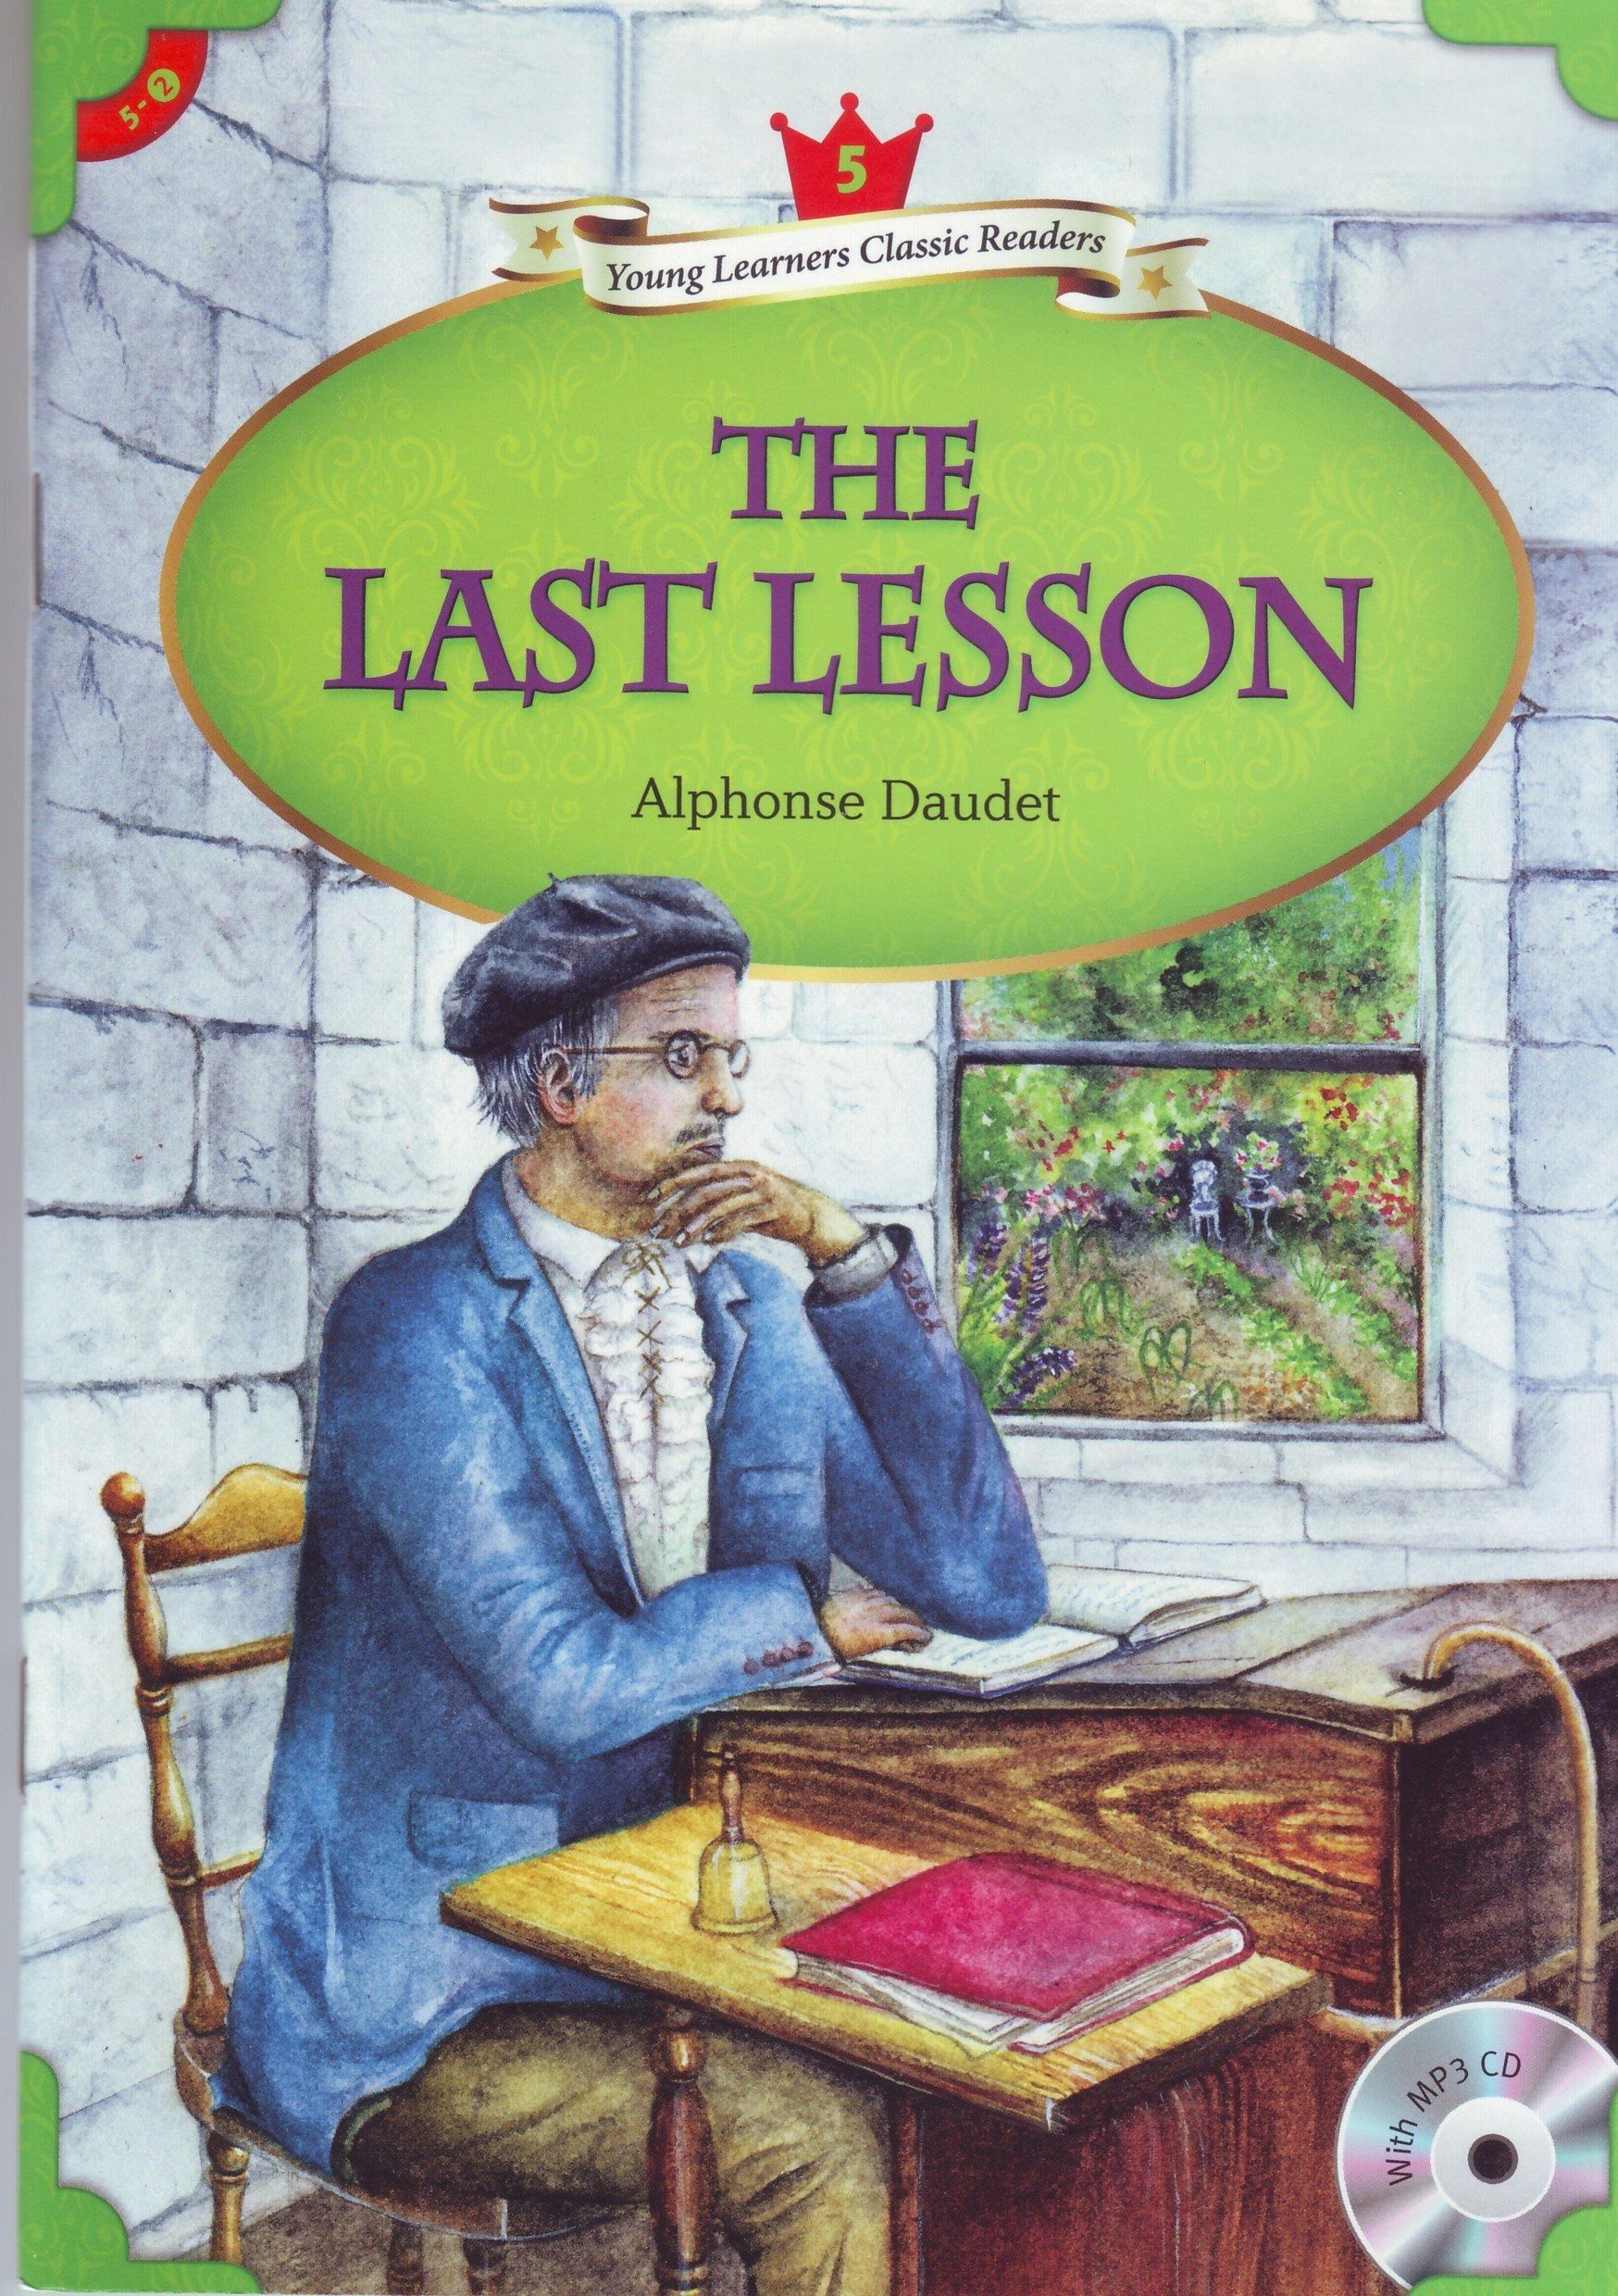 The Last Lesson' by Alphonse Daudet